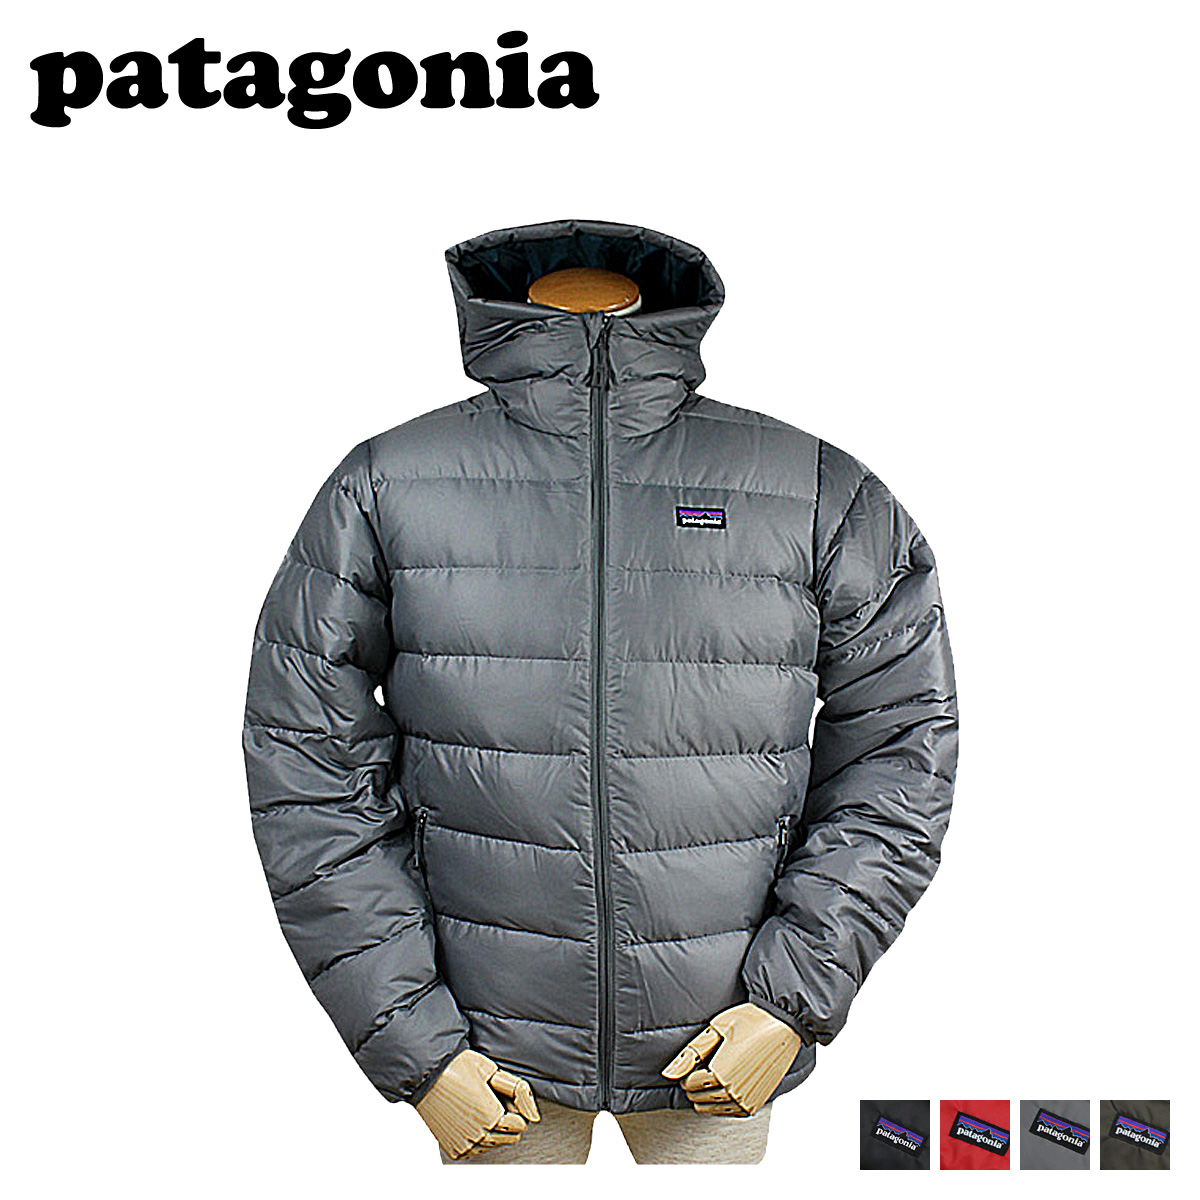 patagonia down sweater hoody sale